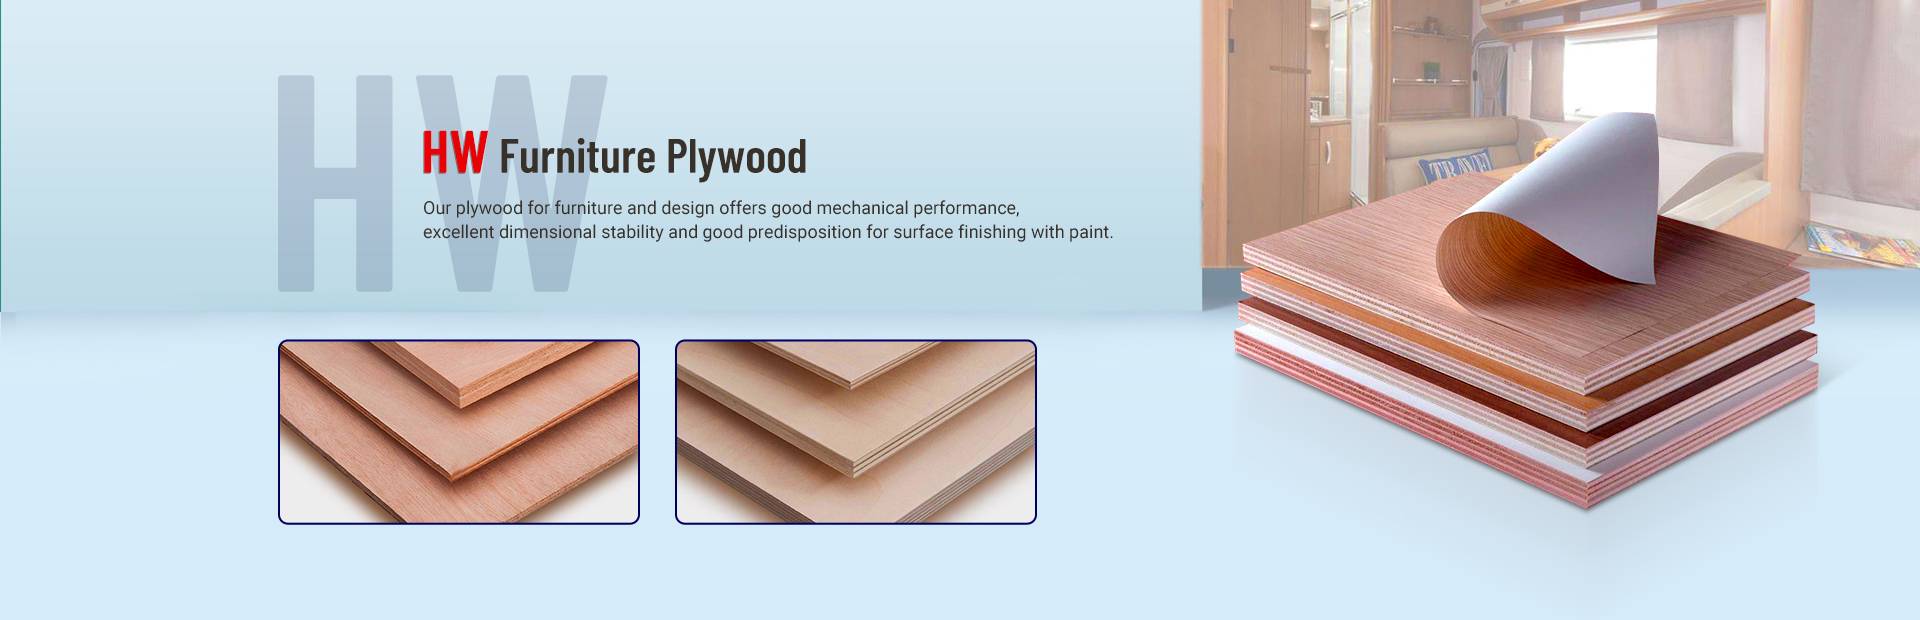 Furniture Plywood banner